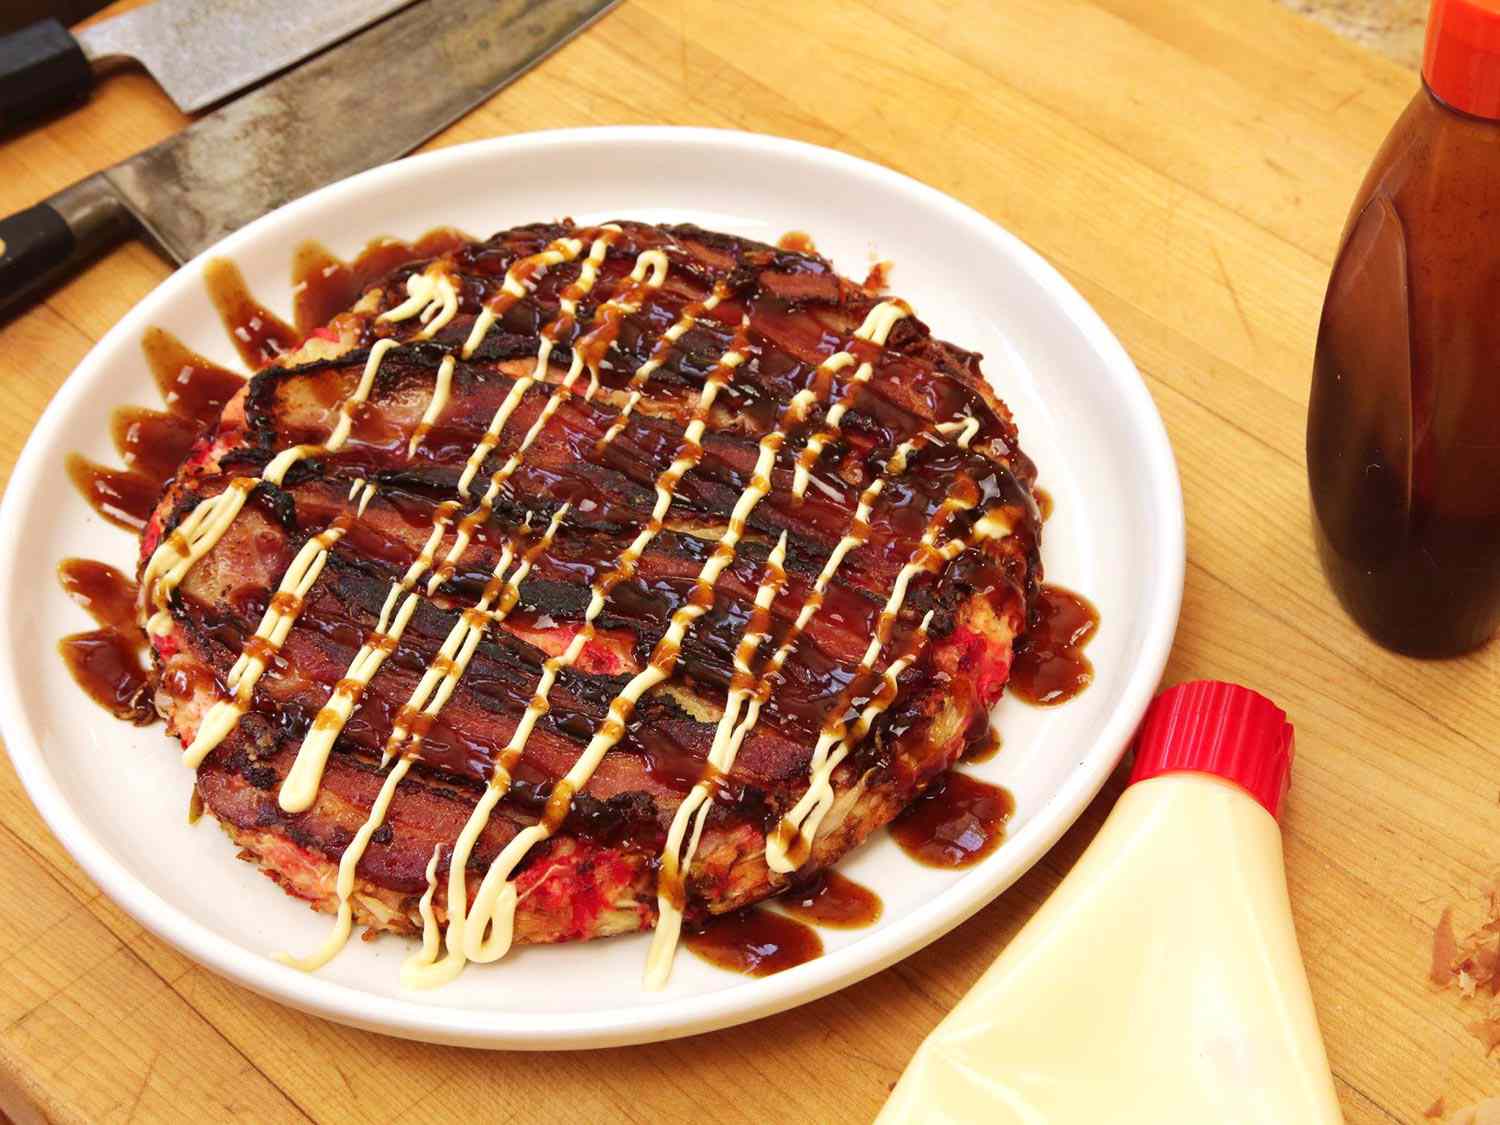 An okonomyaki, a savory Japanese pancake, covered in kewpie drizzle